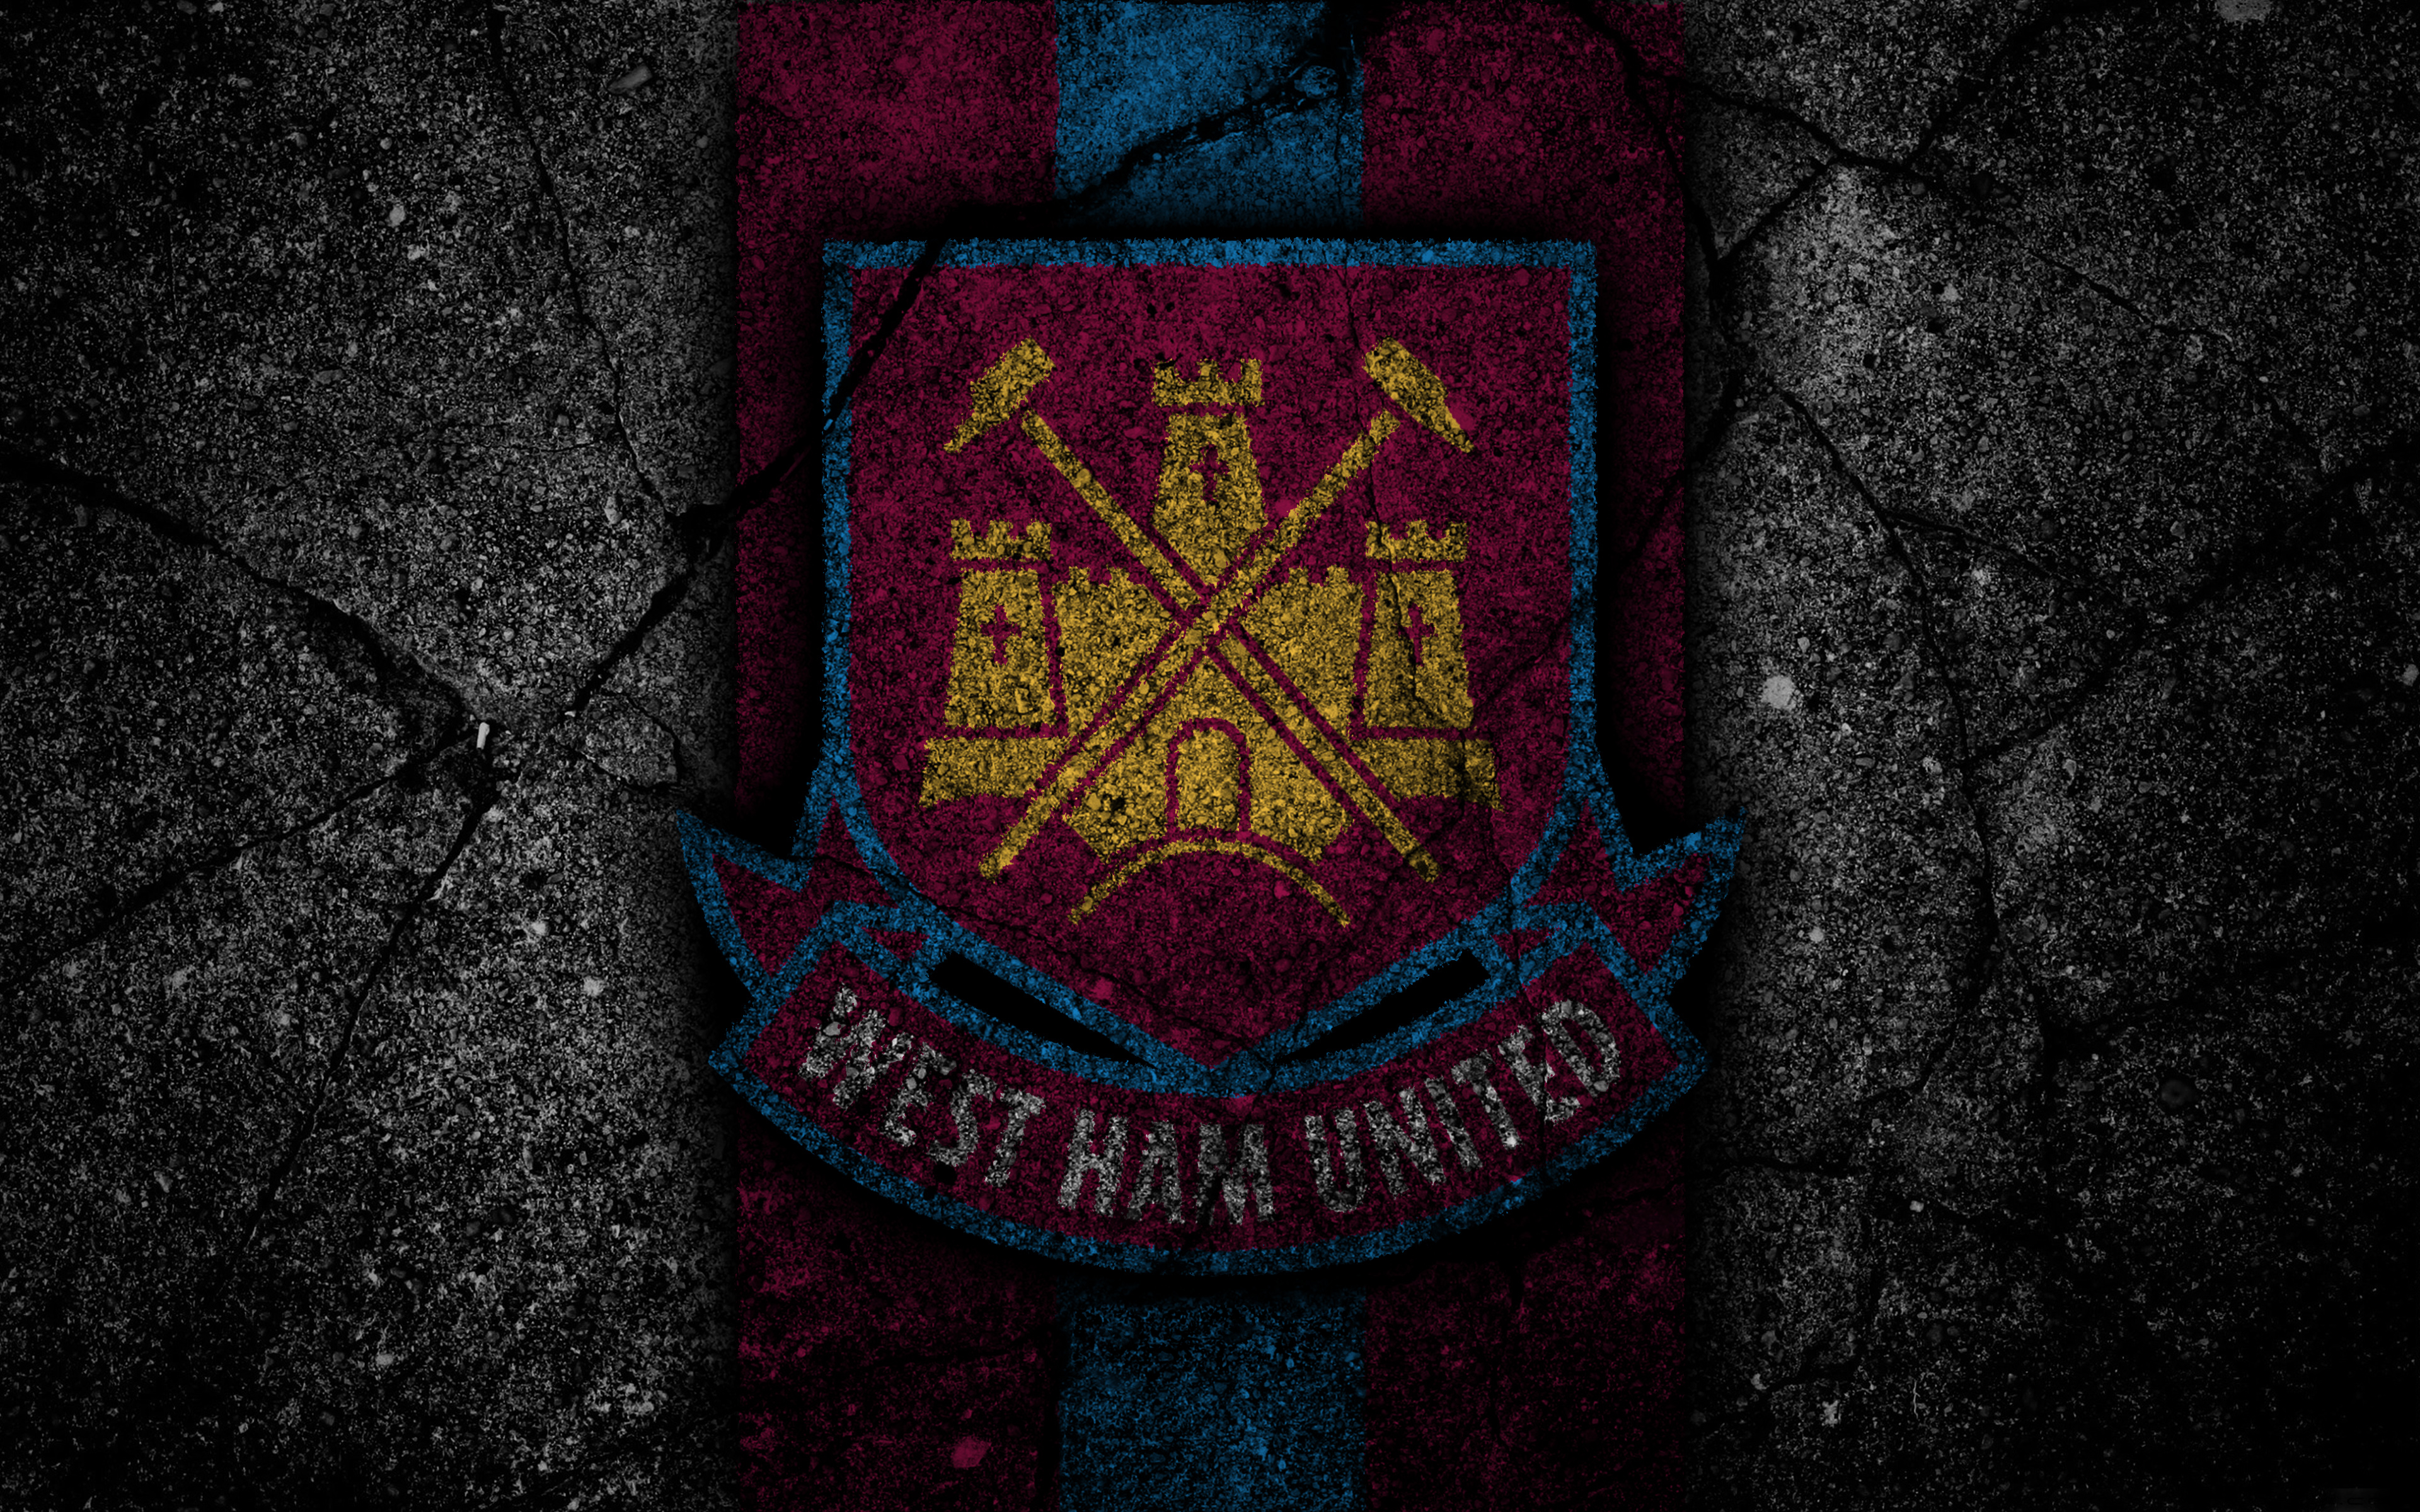 Descarga gratuita de fondo de pantalla para móvil de Fútbol, Logo, Emblema, Deporte, West Ham United Fc.